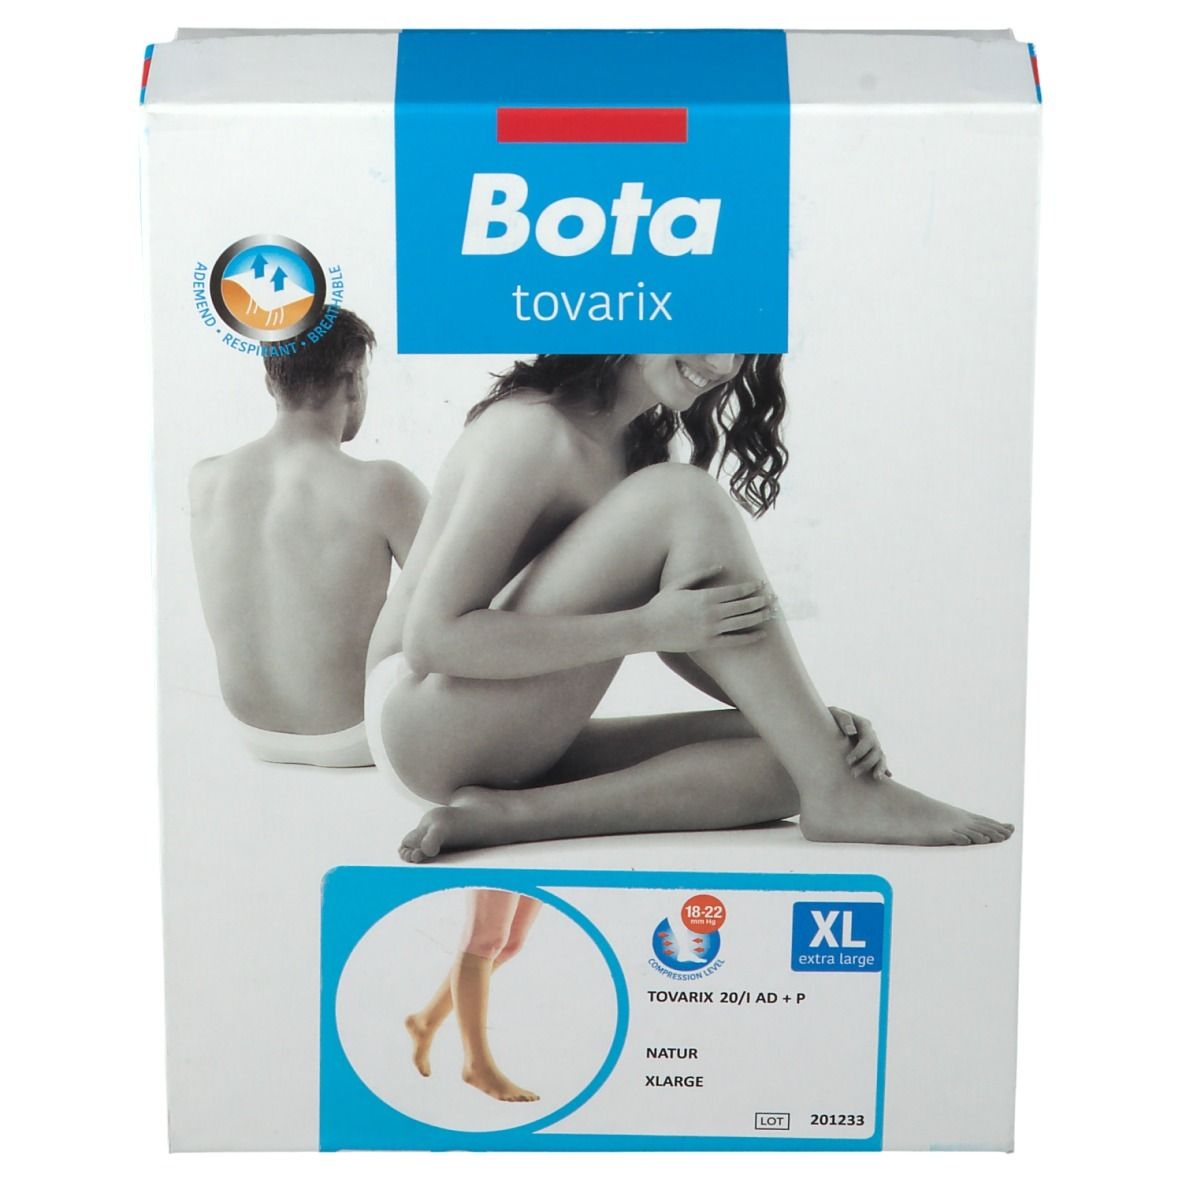 Bota Tovarix 20/I Bas jarret Ad+P Natur Extra Large